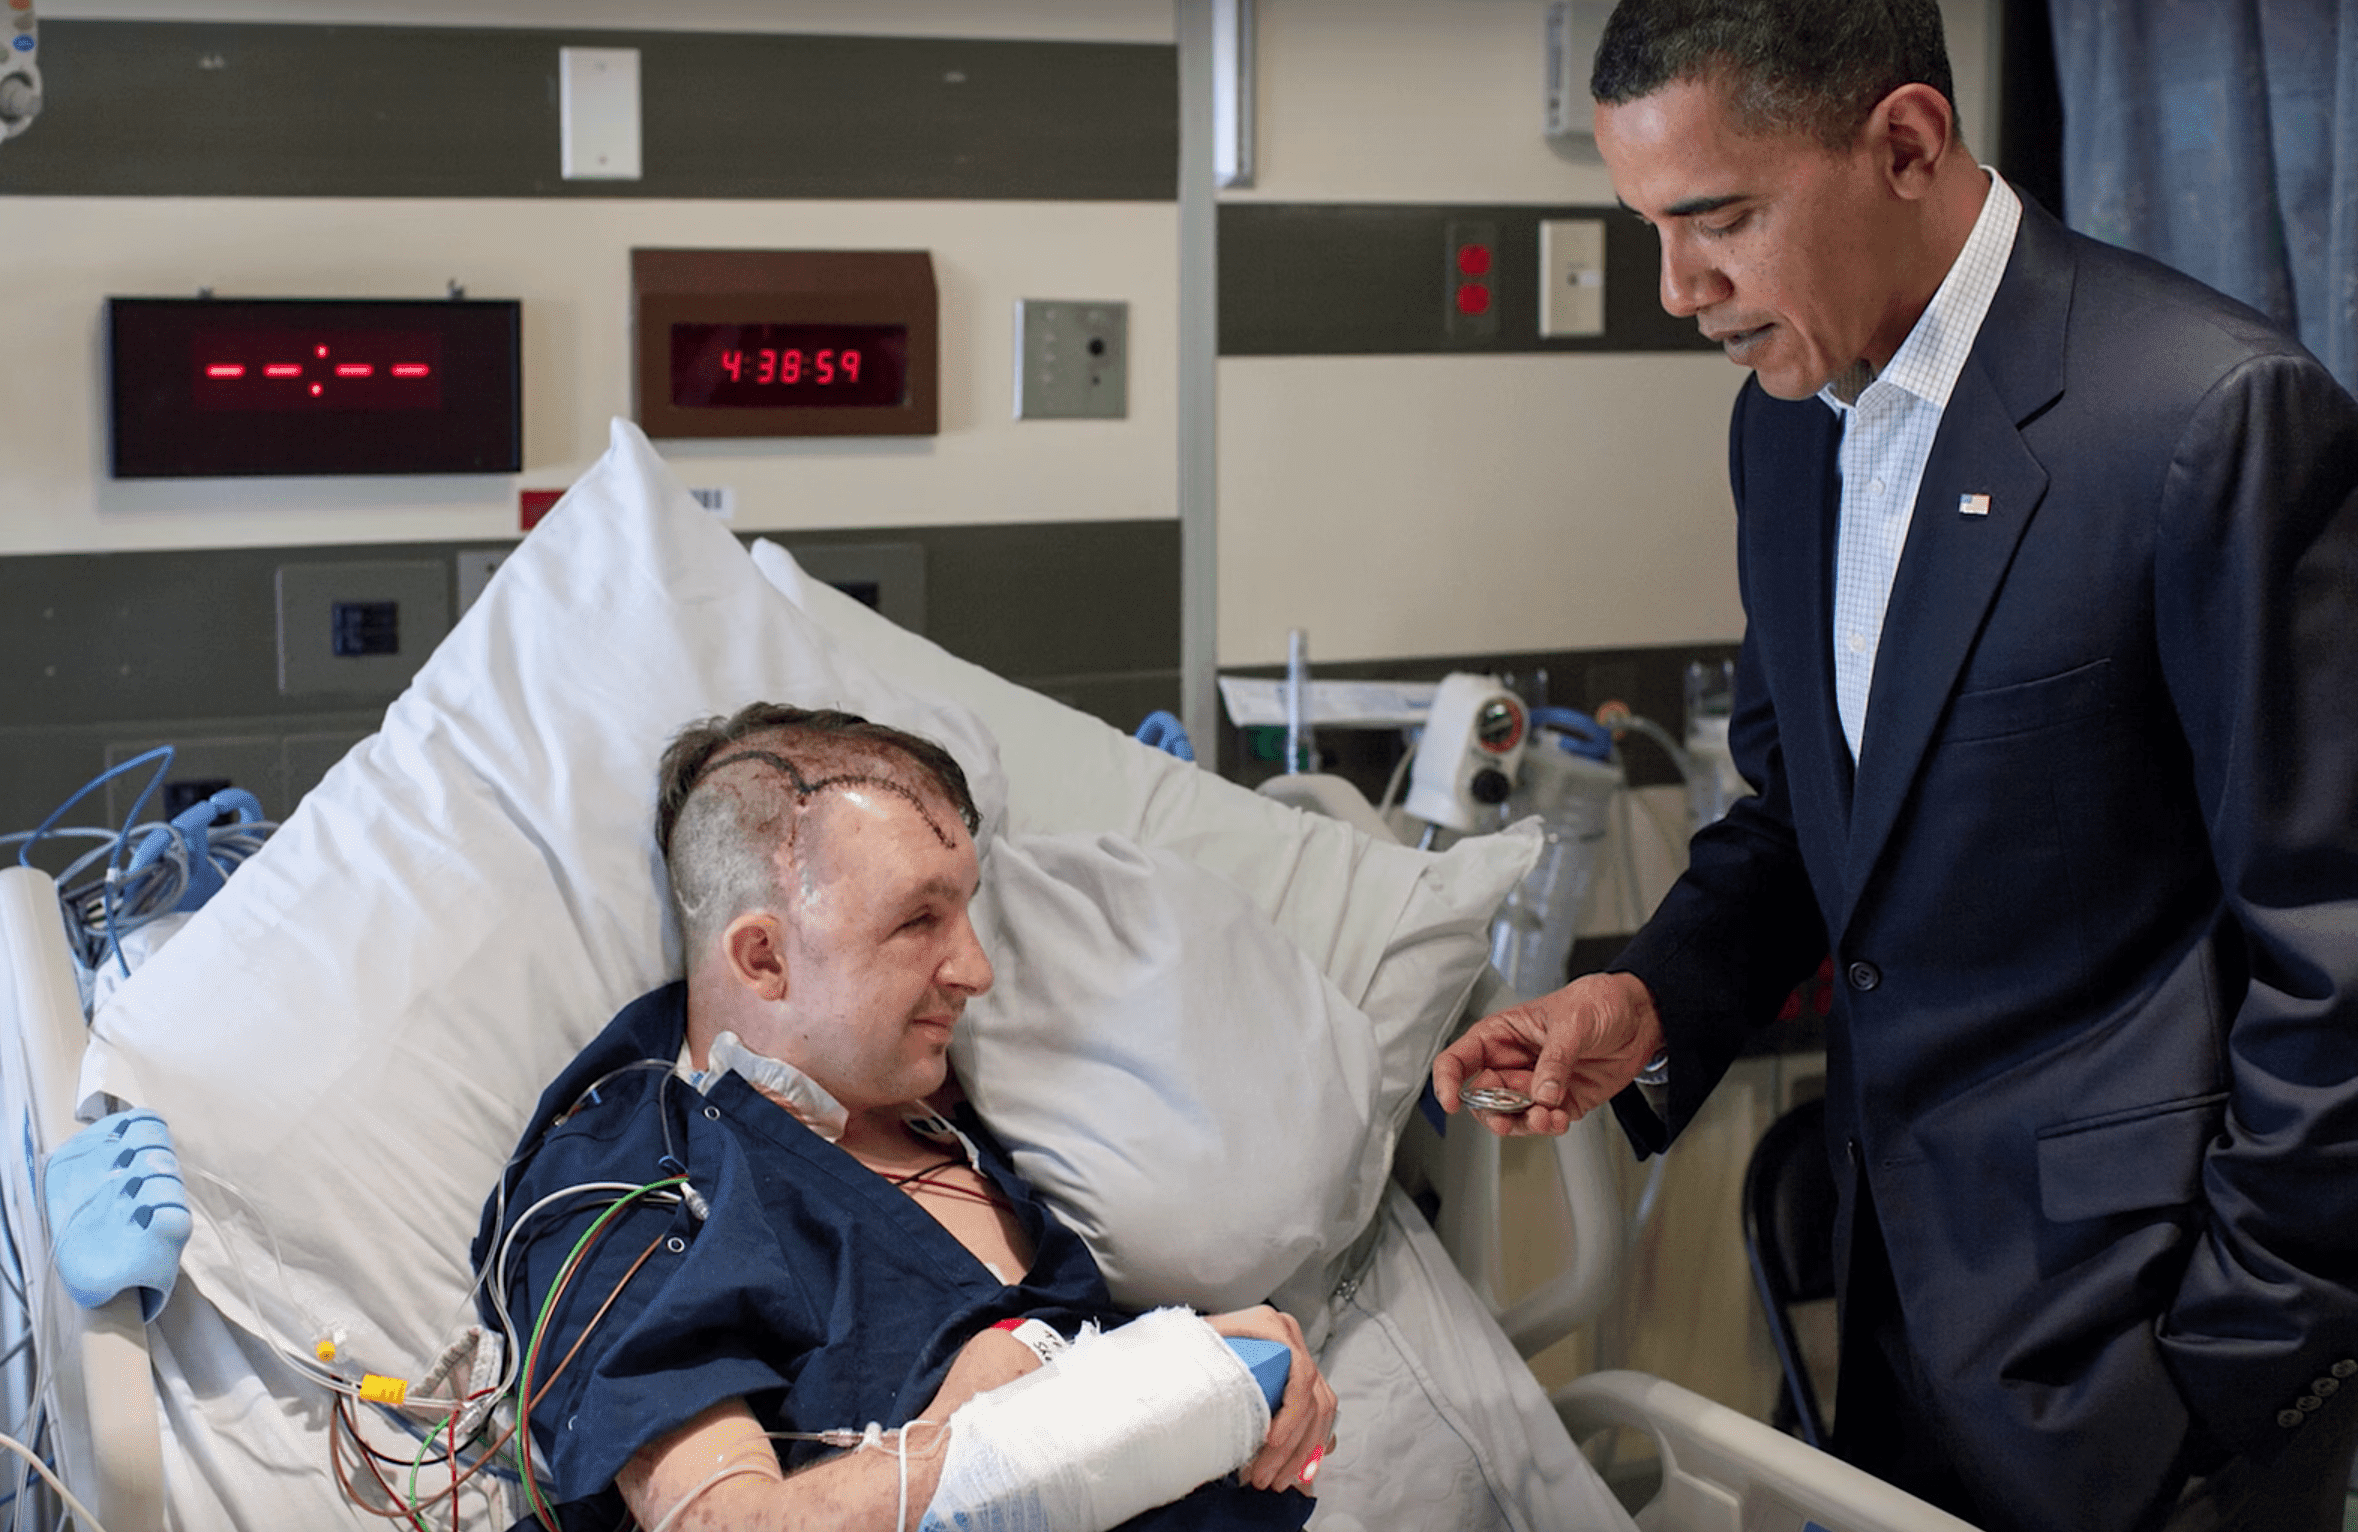 Obama and Cory meet at a hospital. | Source: YouTube/theobamawhitehouse